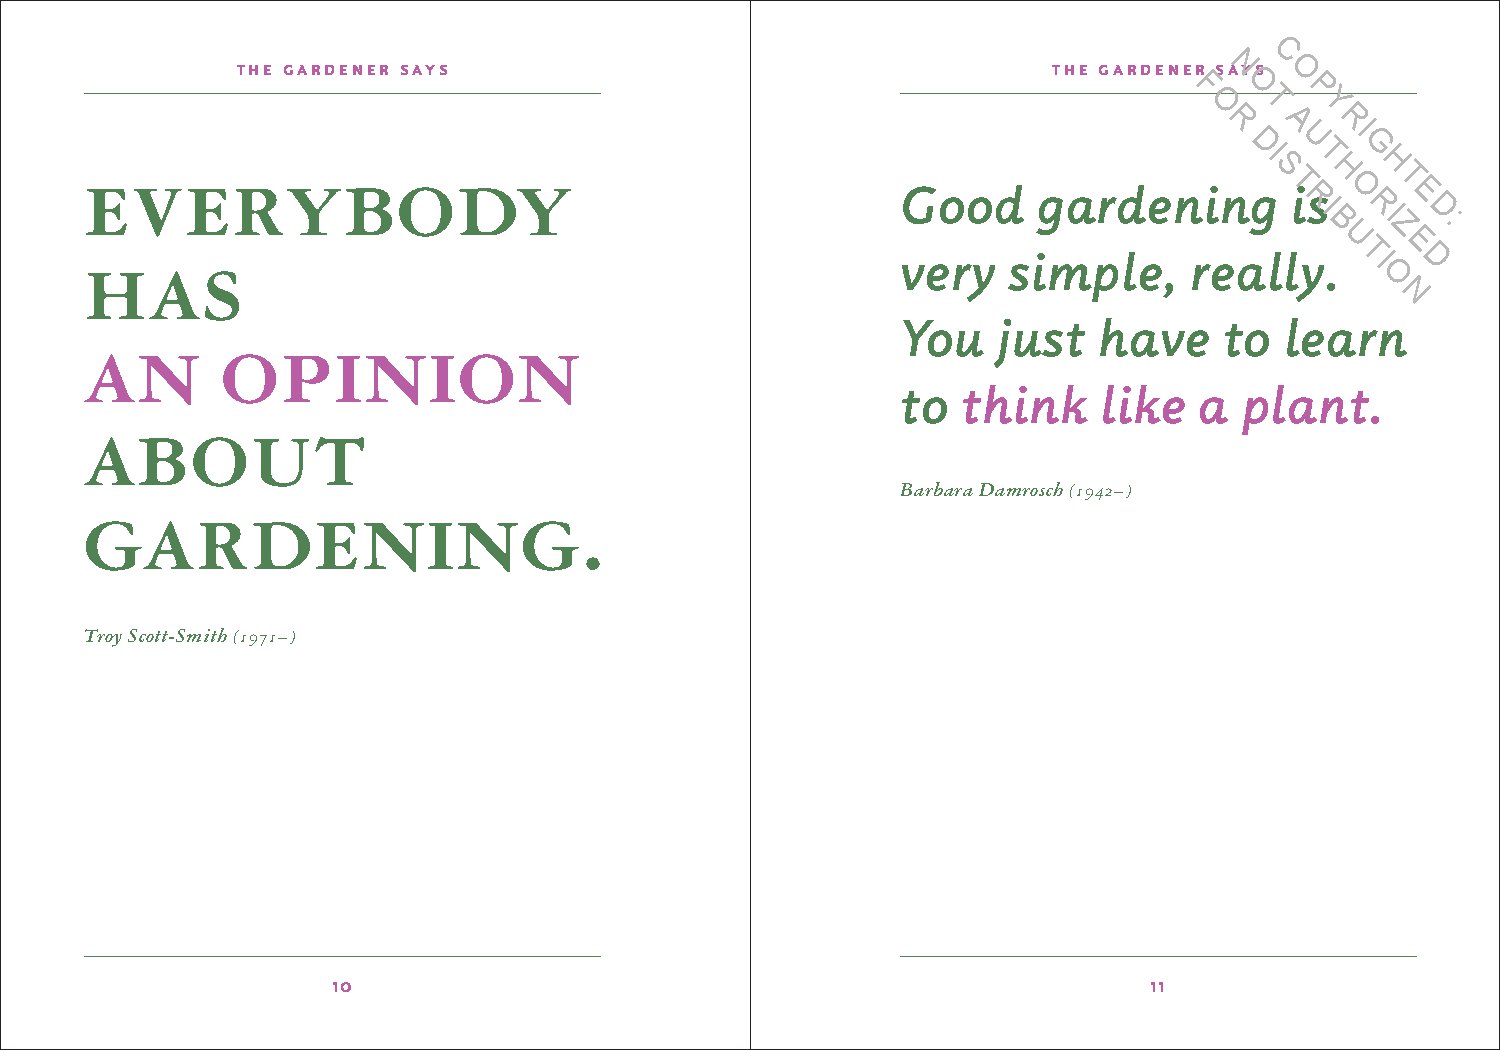 The Gardener Says